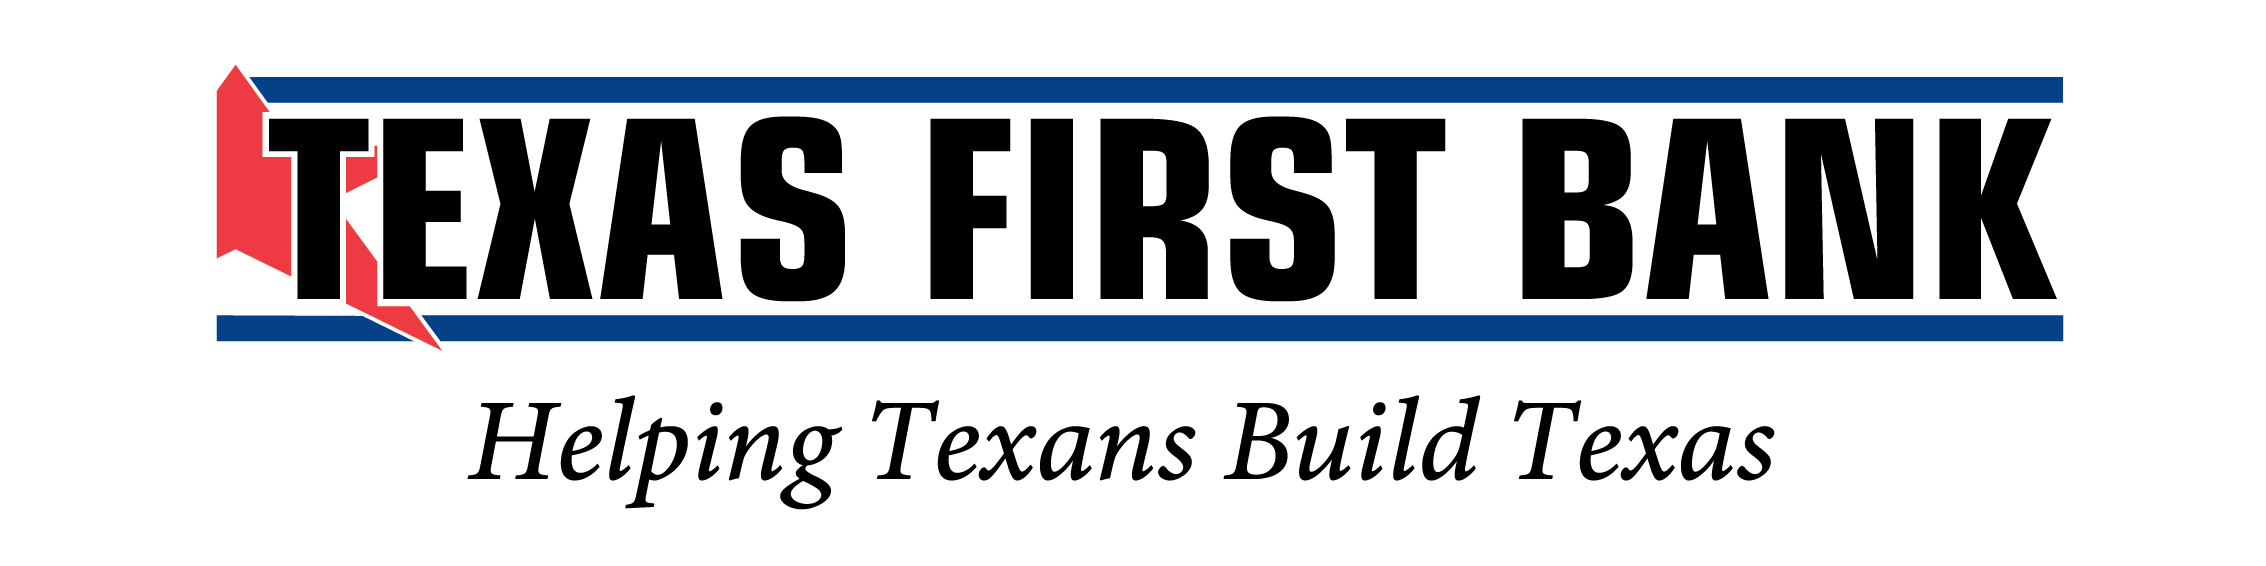 Texas first bank